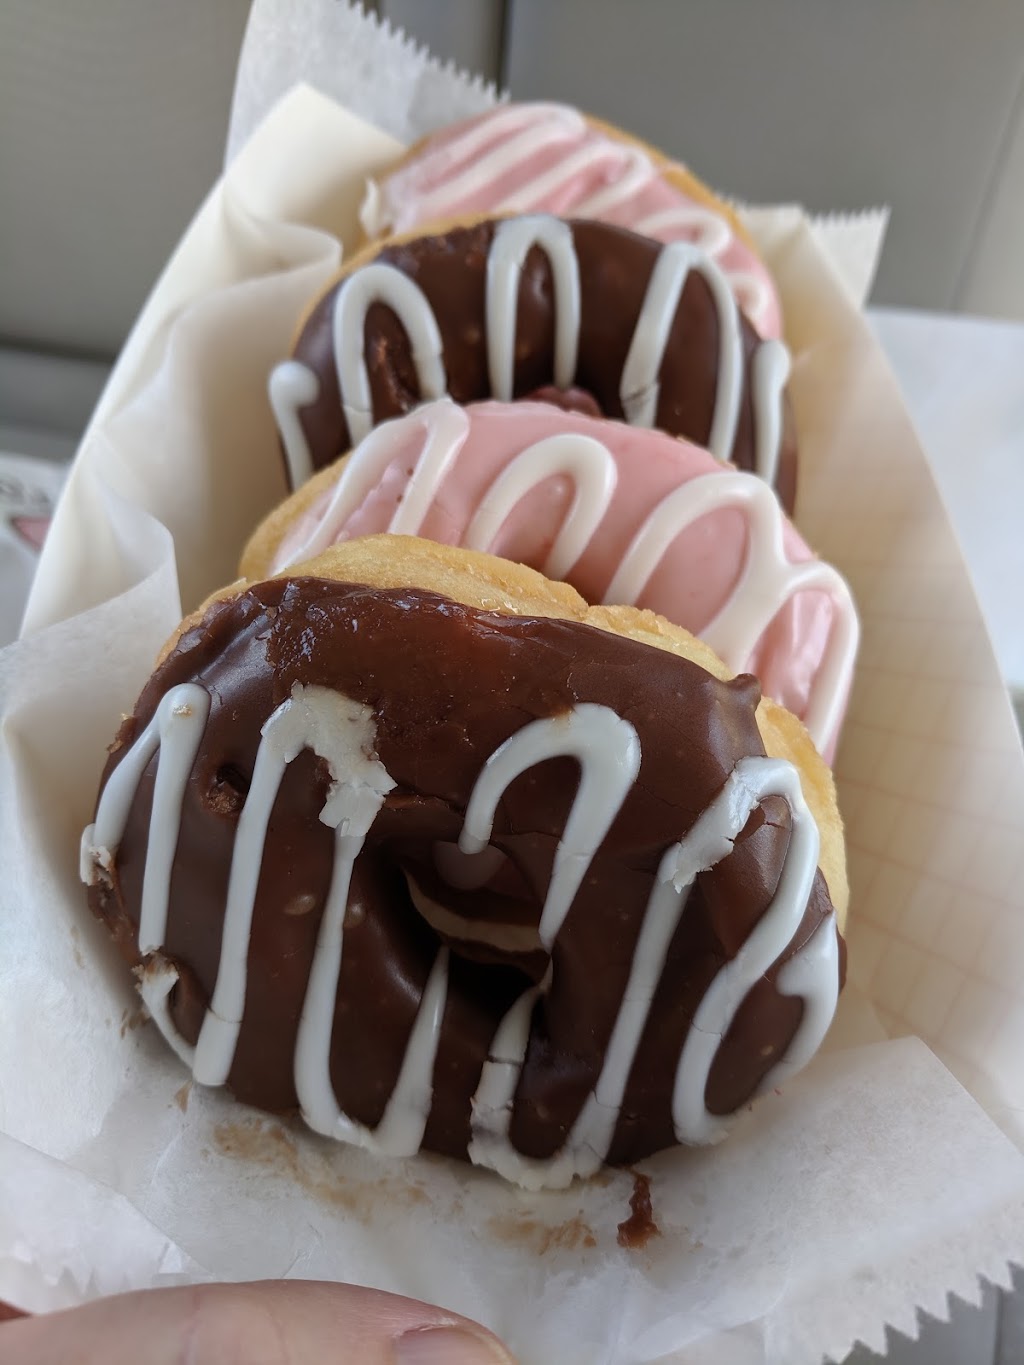 Holey Good Donuts | 18564 Magnolia Bridge Rd #109, Greenwell Springs, LA 70739, USA | Phone: (225) 256-4642